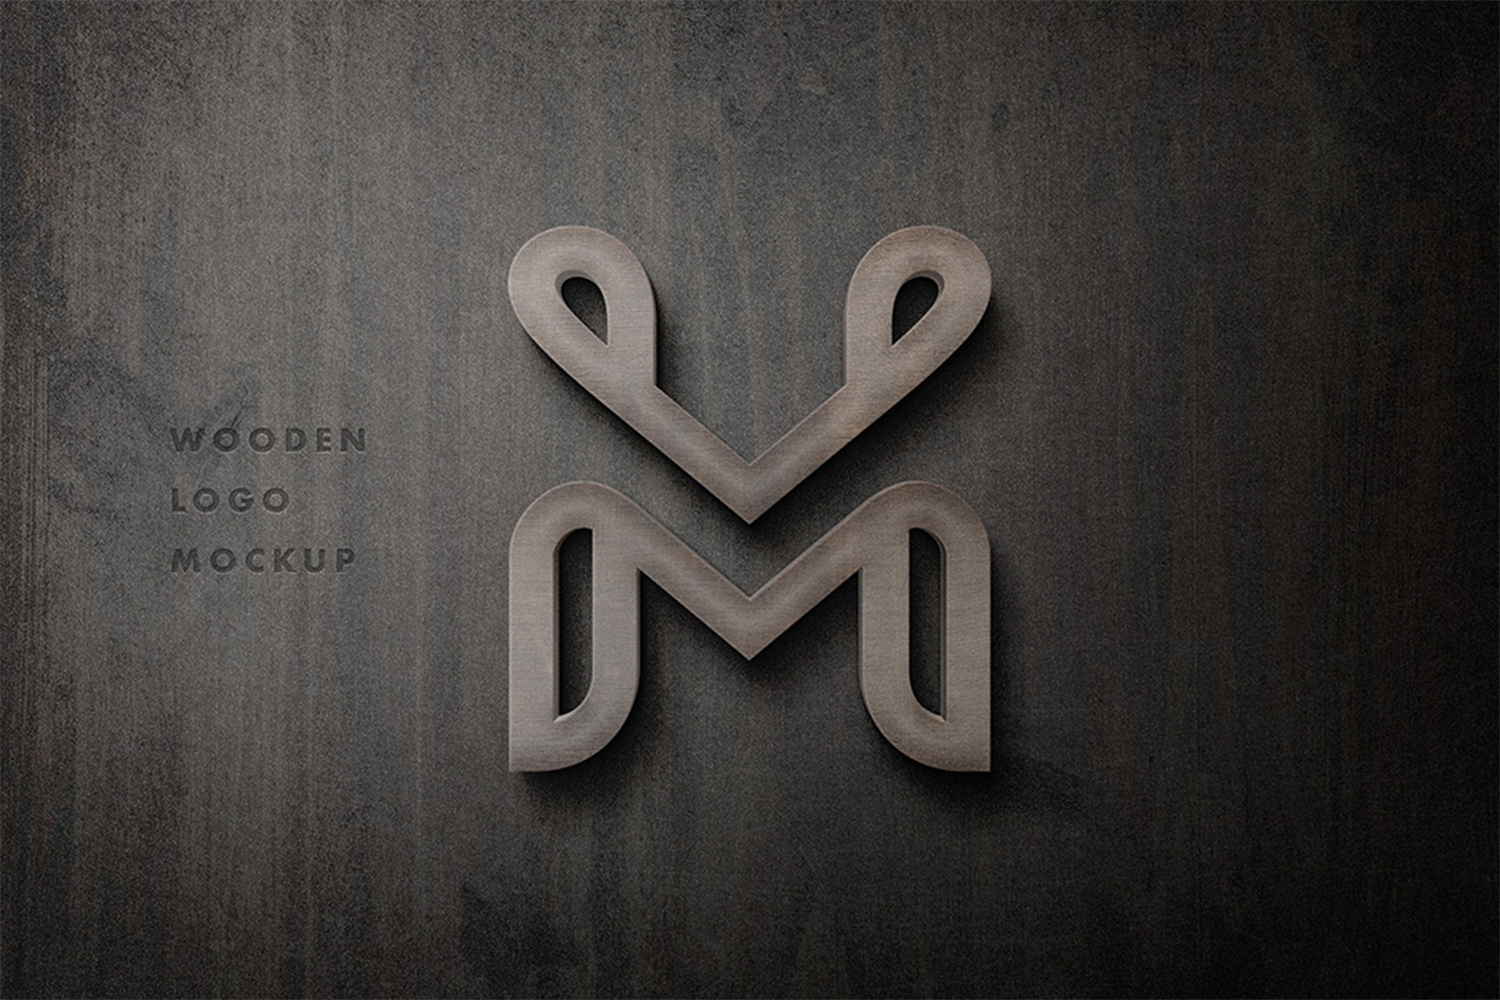 Wooden 3D Logo Mockup PSD Free Download